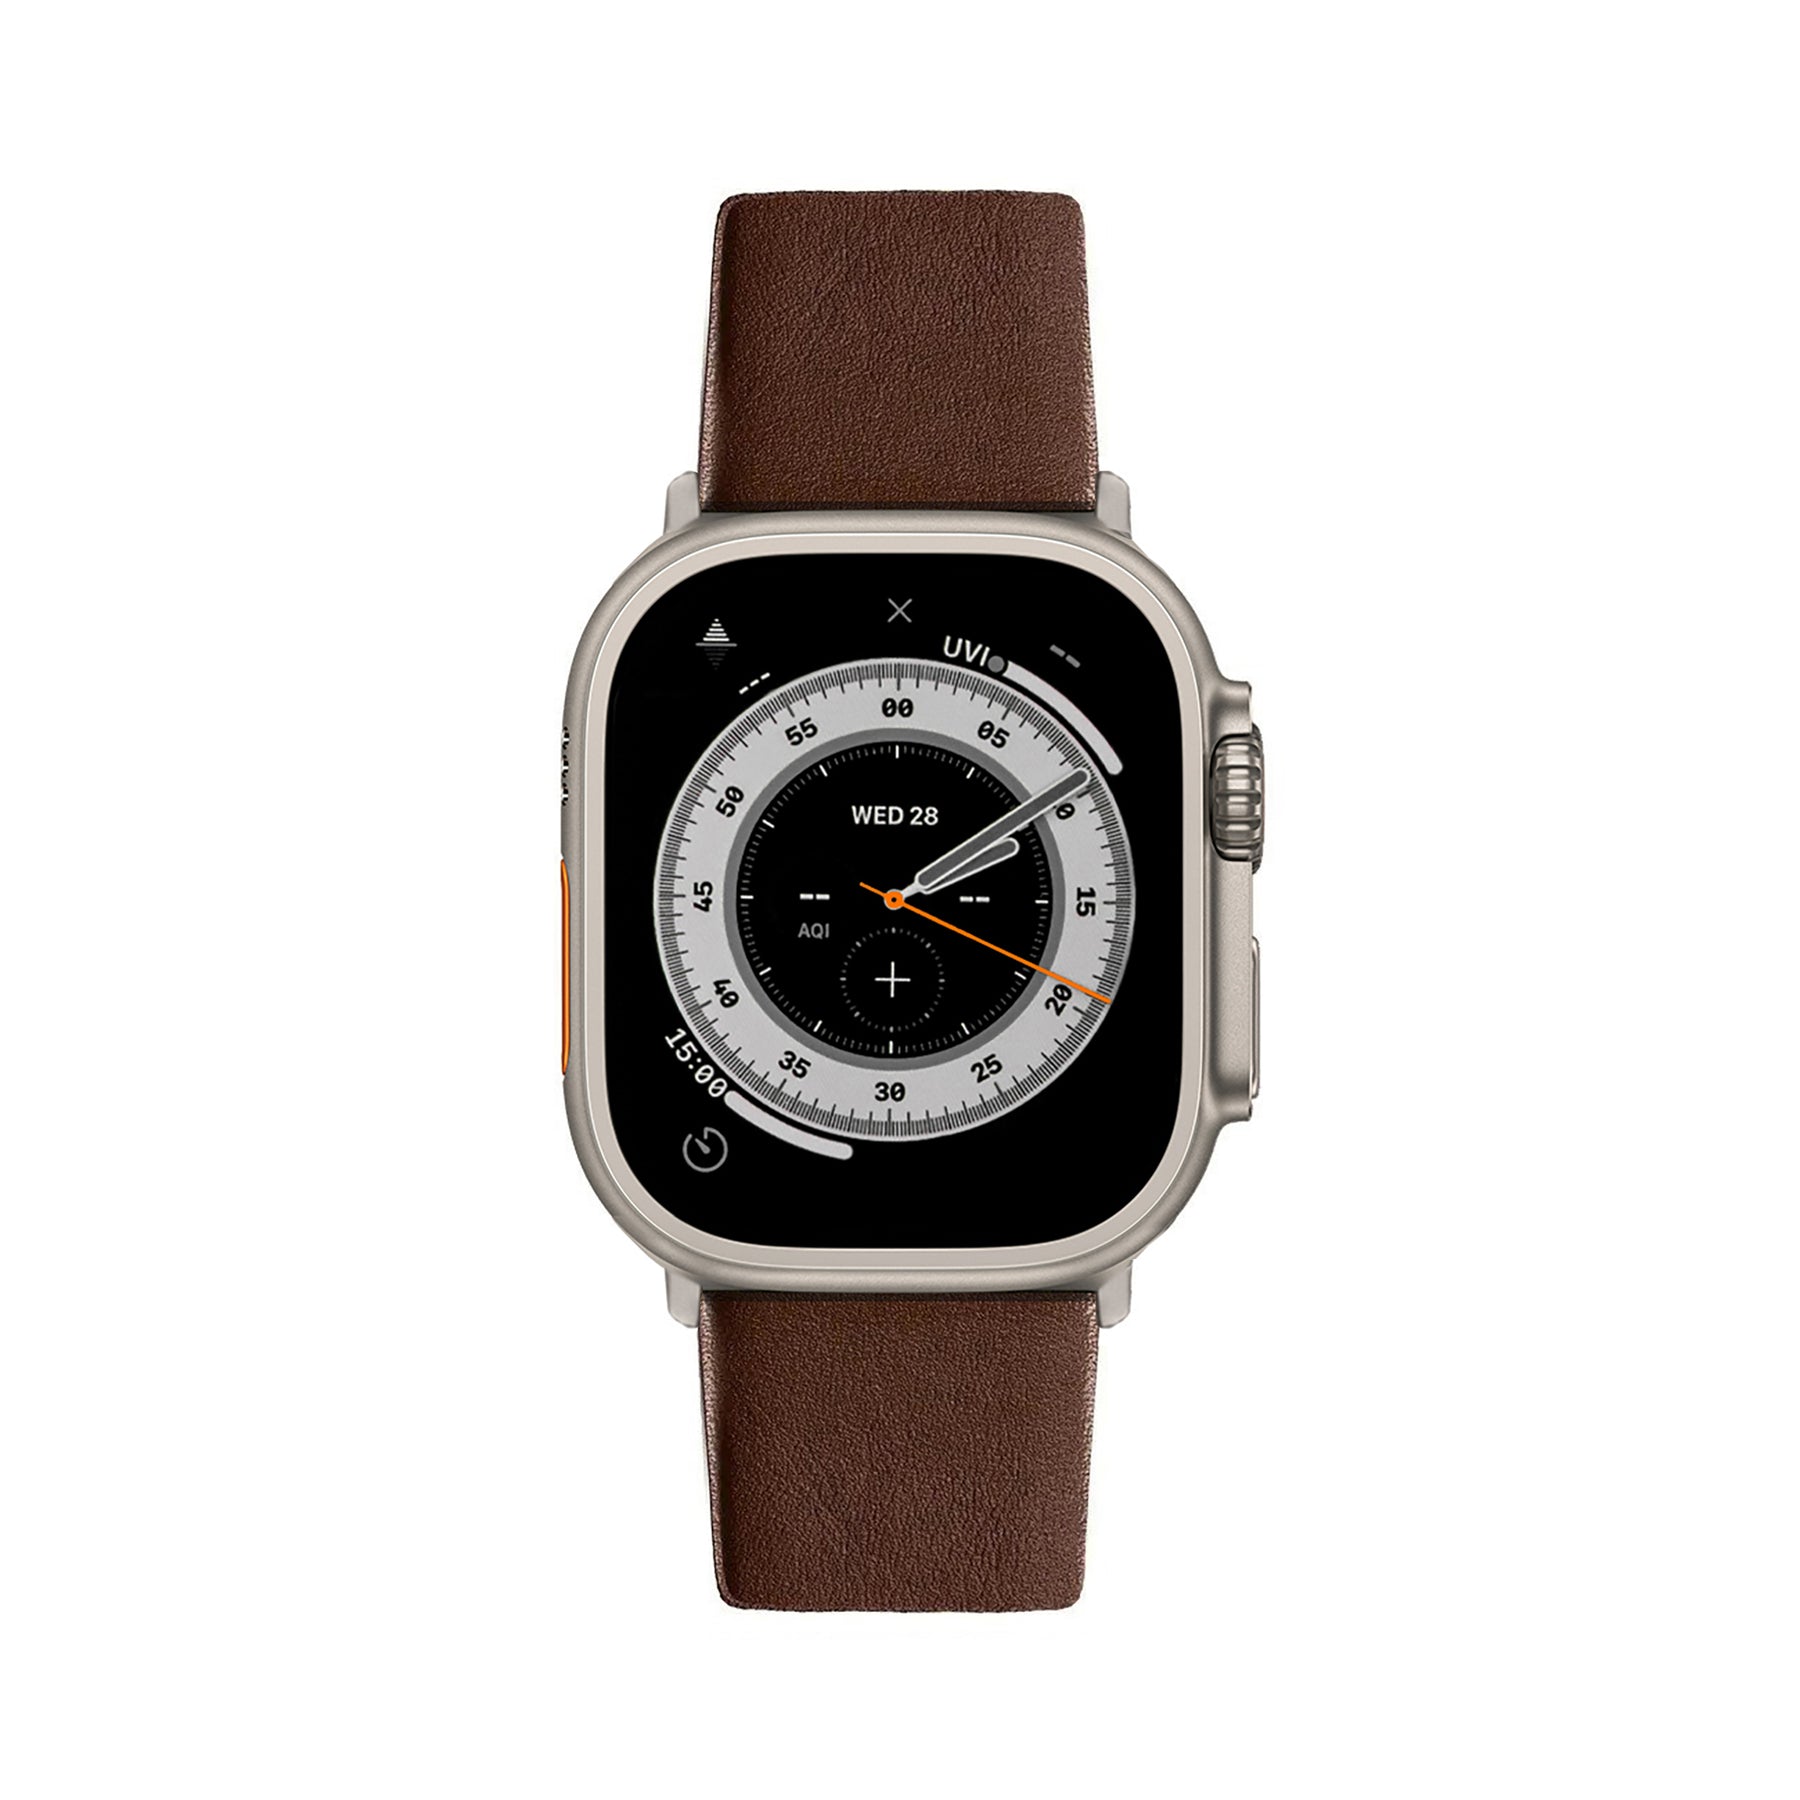 Watch Bracelet Leather Brand New Watch Strap for Apple Watch